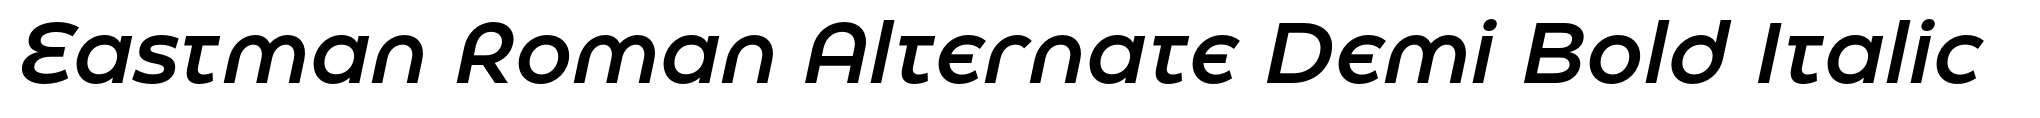 Eastman Roman Alternate Demi Bold Italic image